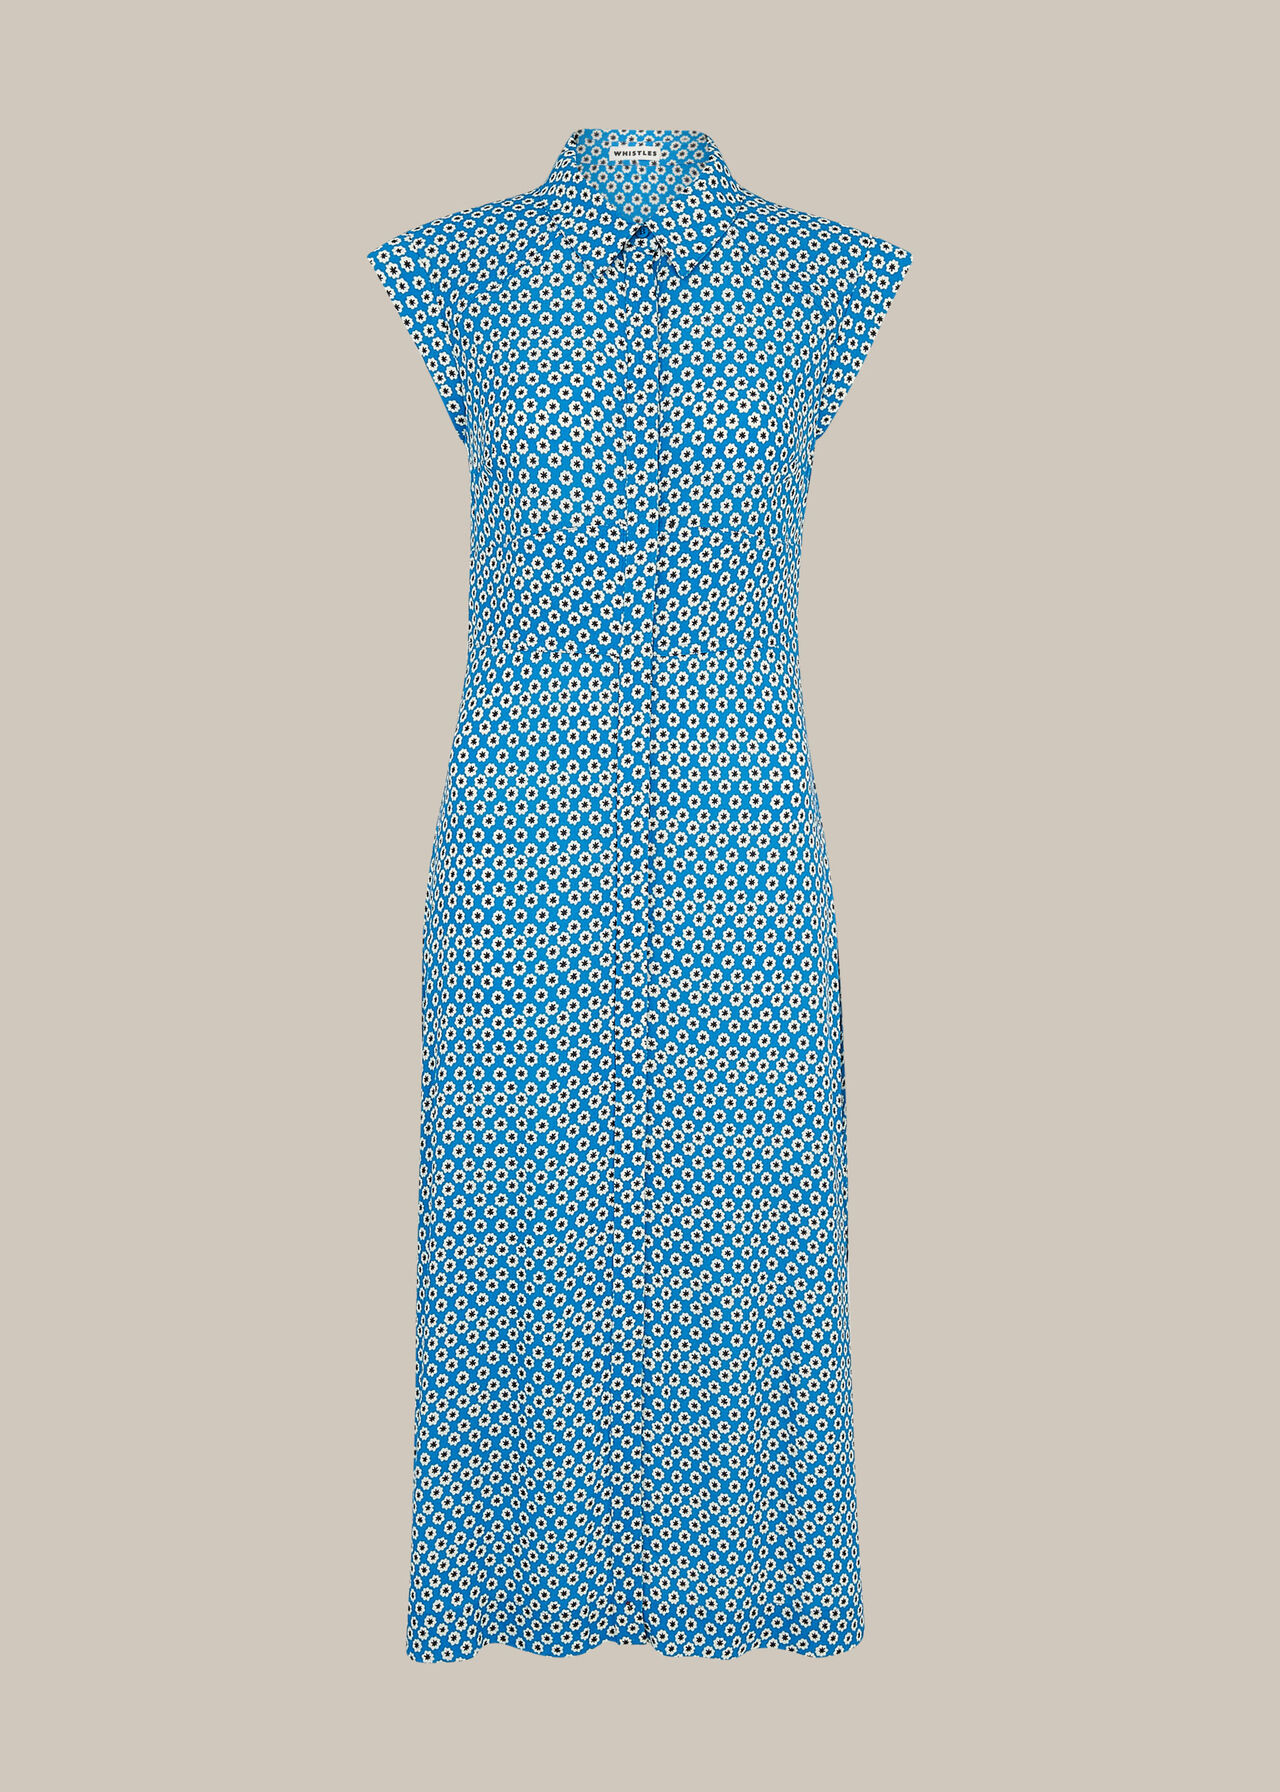 Astrix Floral Blue Dress